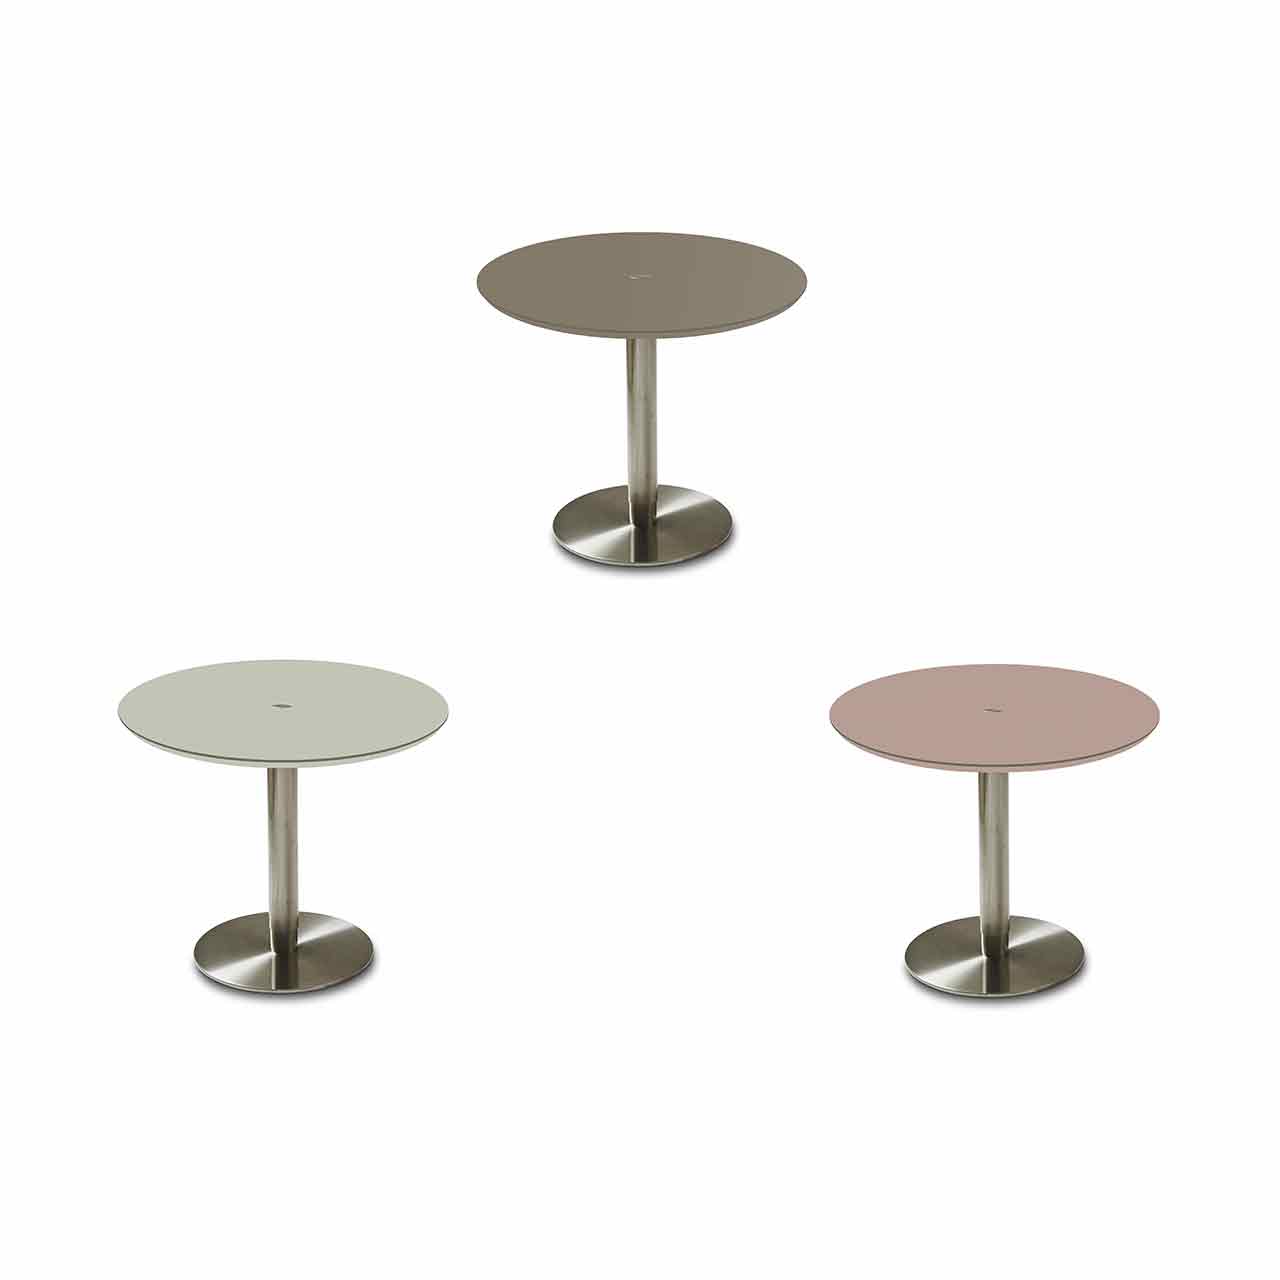 Ronald Schmitt – Triplex P431 | Tischplatte Optiwhite Glas 90 cm, Bodenplatte Edelstahl mattiert, von links nach rechts: Farbe Weiß, Terra, Graurosa